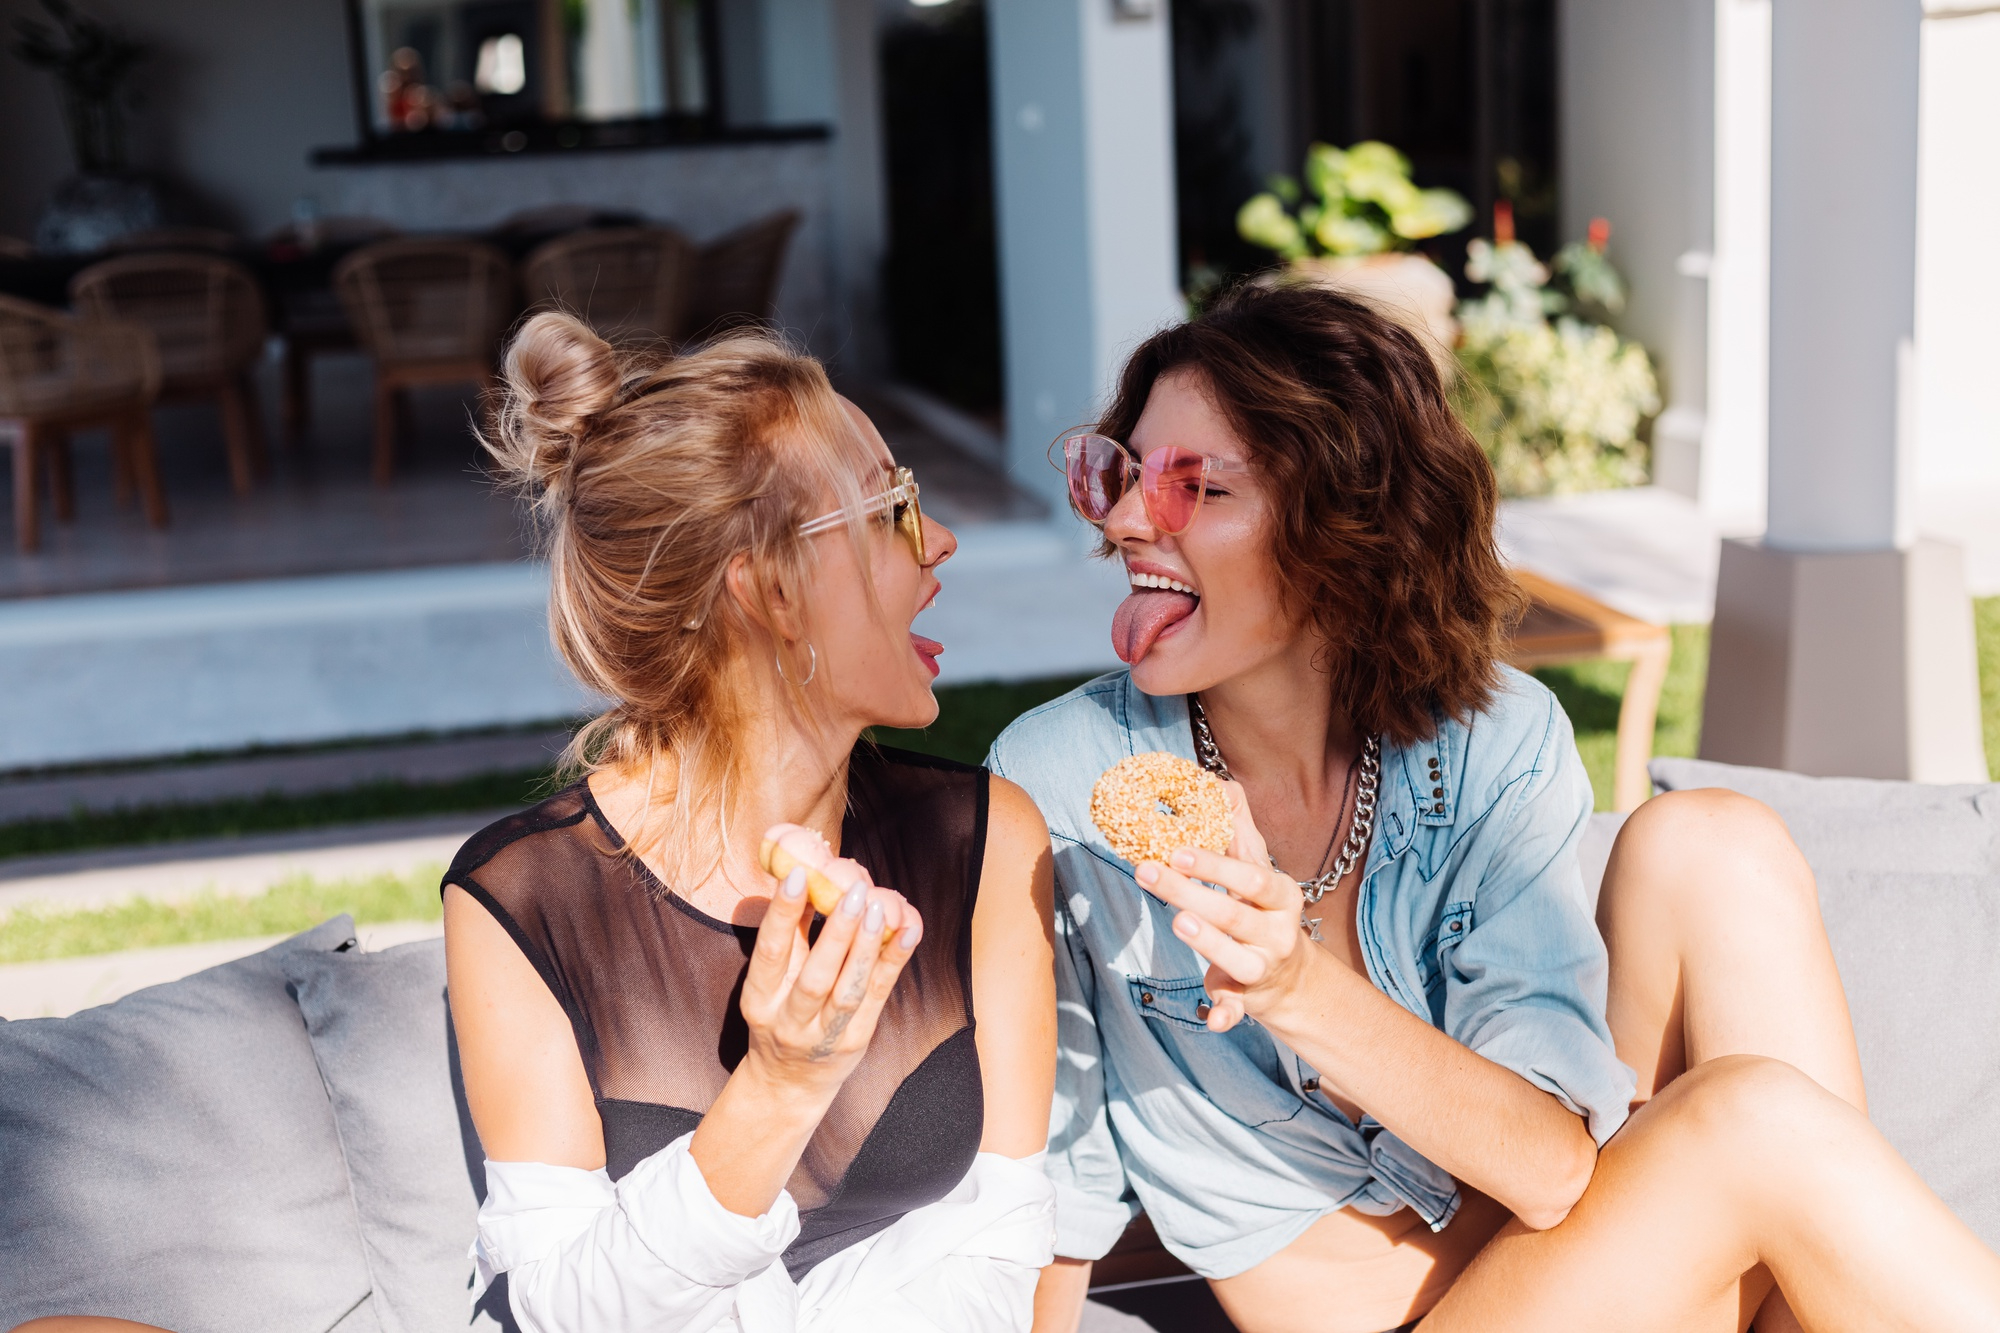 Two women enjoying donuts and having fun | Source: Freepik